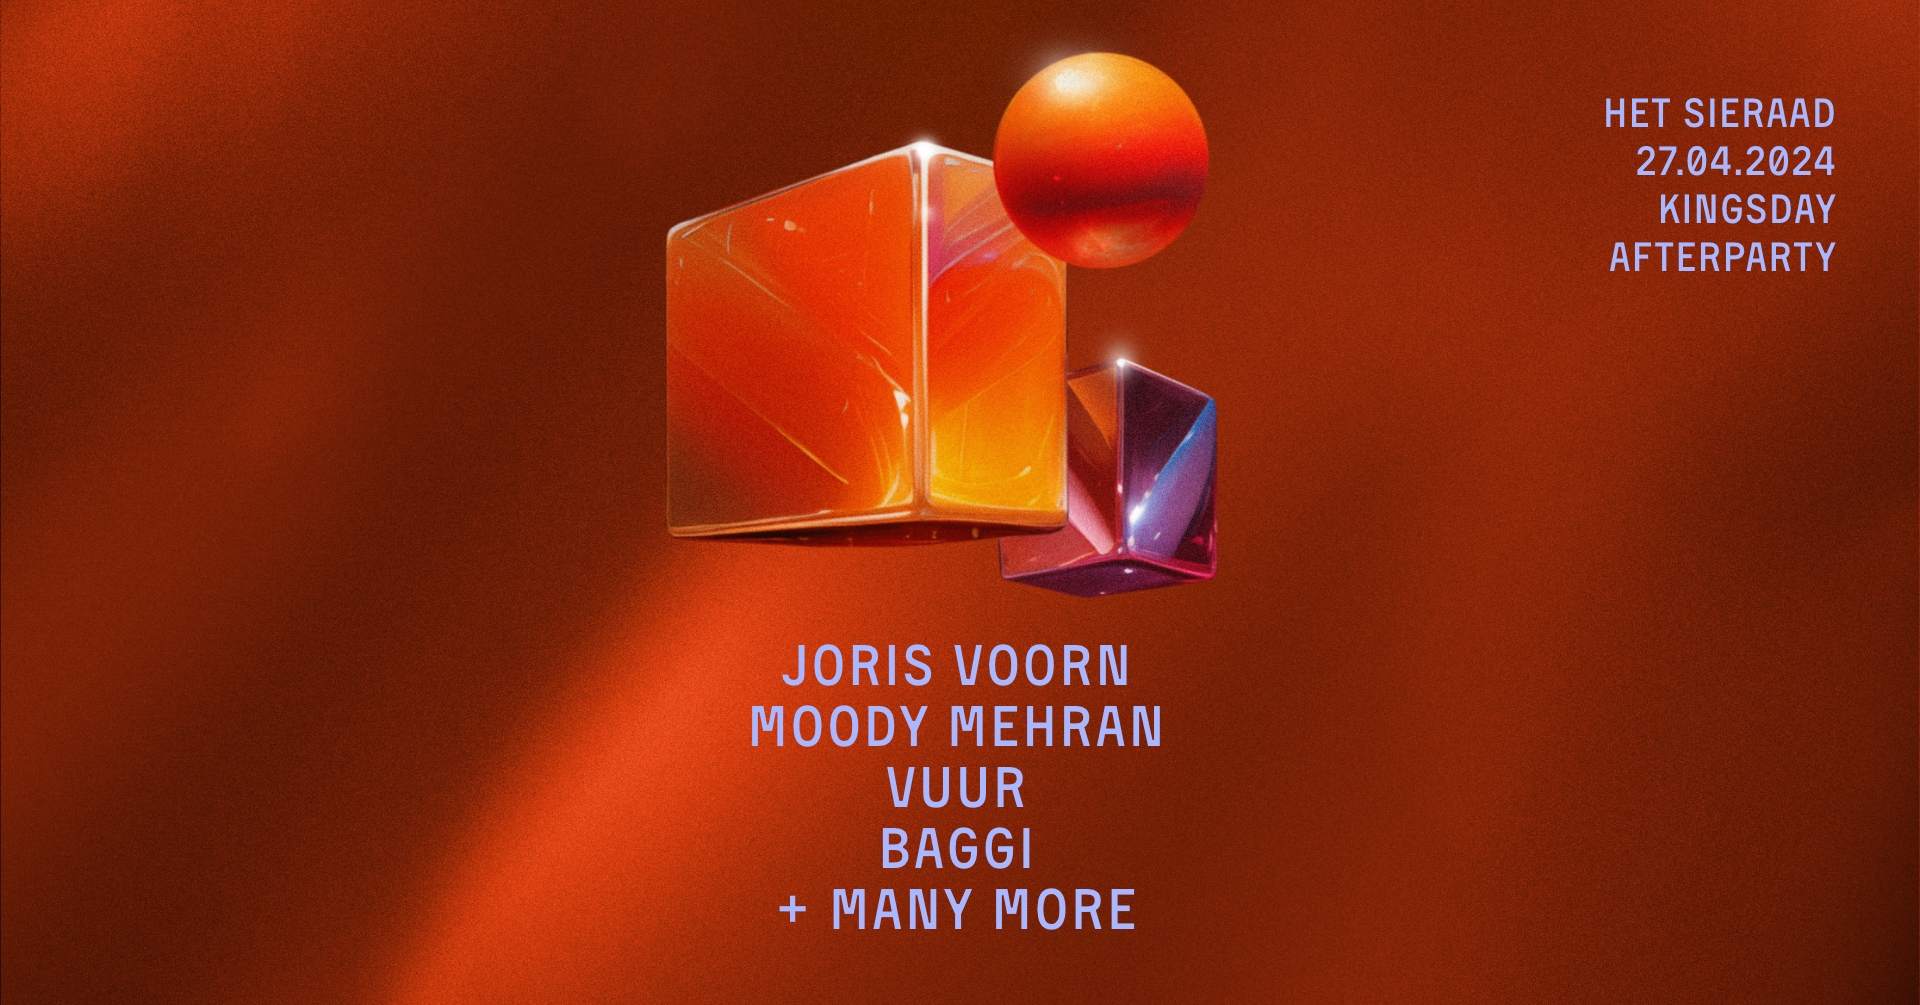 Kingsday Afterparty | Joris Voorn - Moody Mehran - Vuur - BAGGI - SHMLSS - Fouk - + many more - フライヤー表